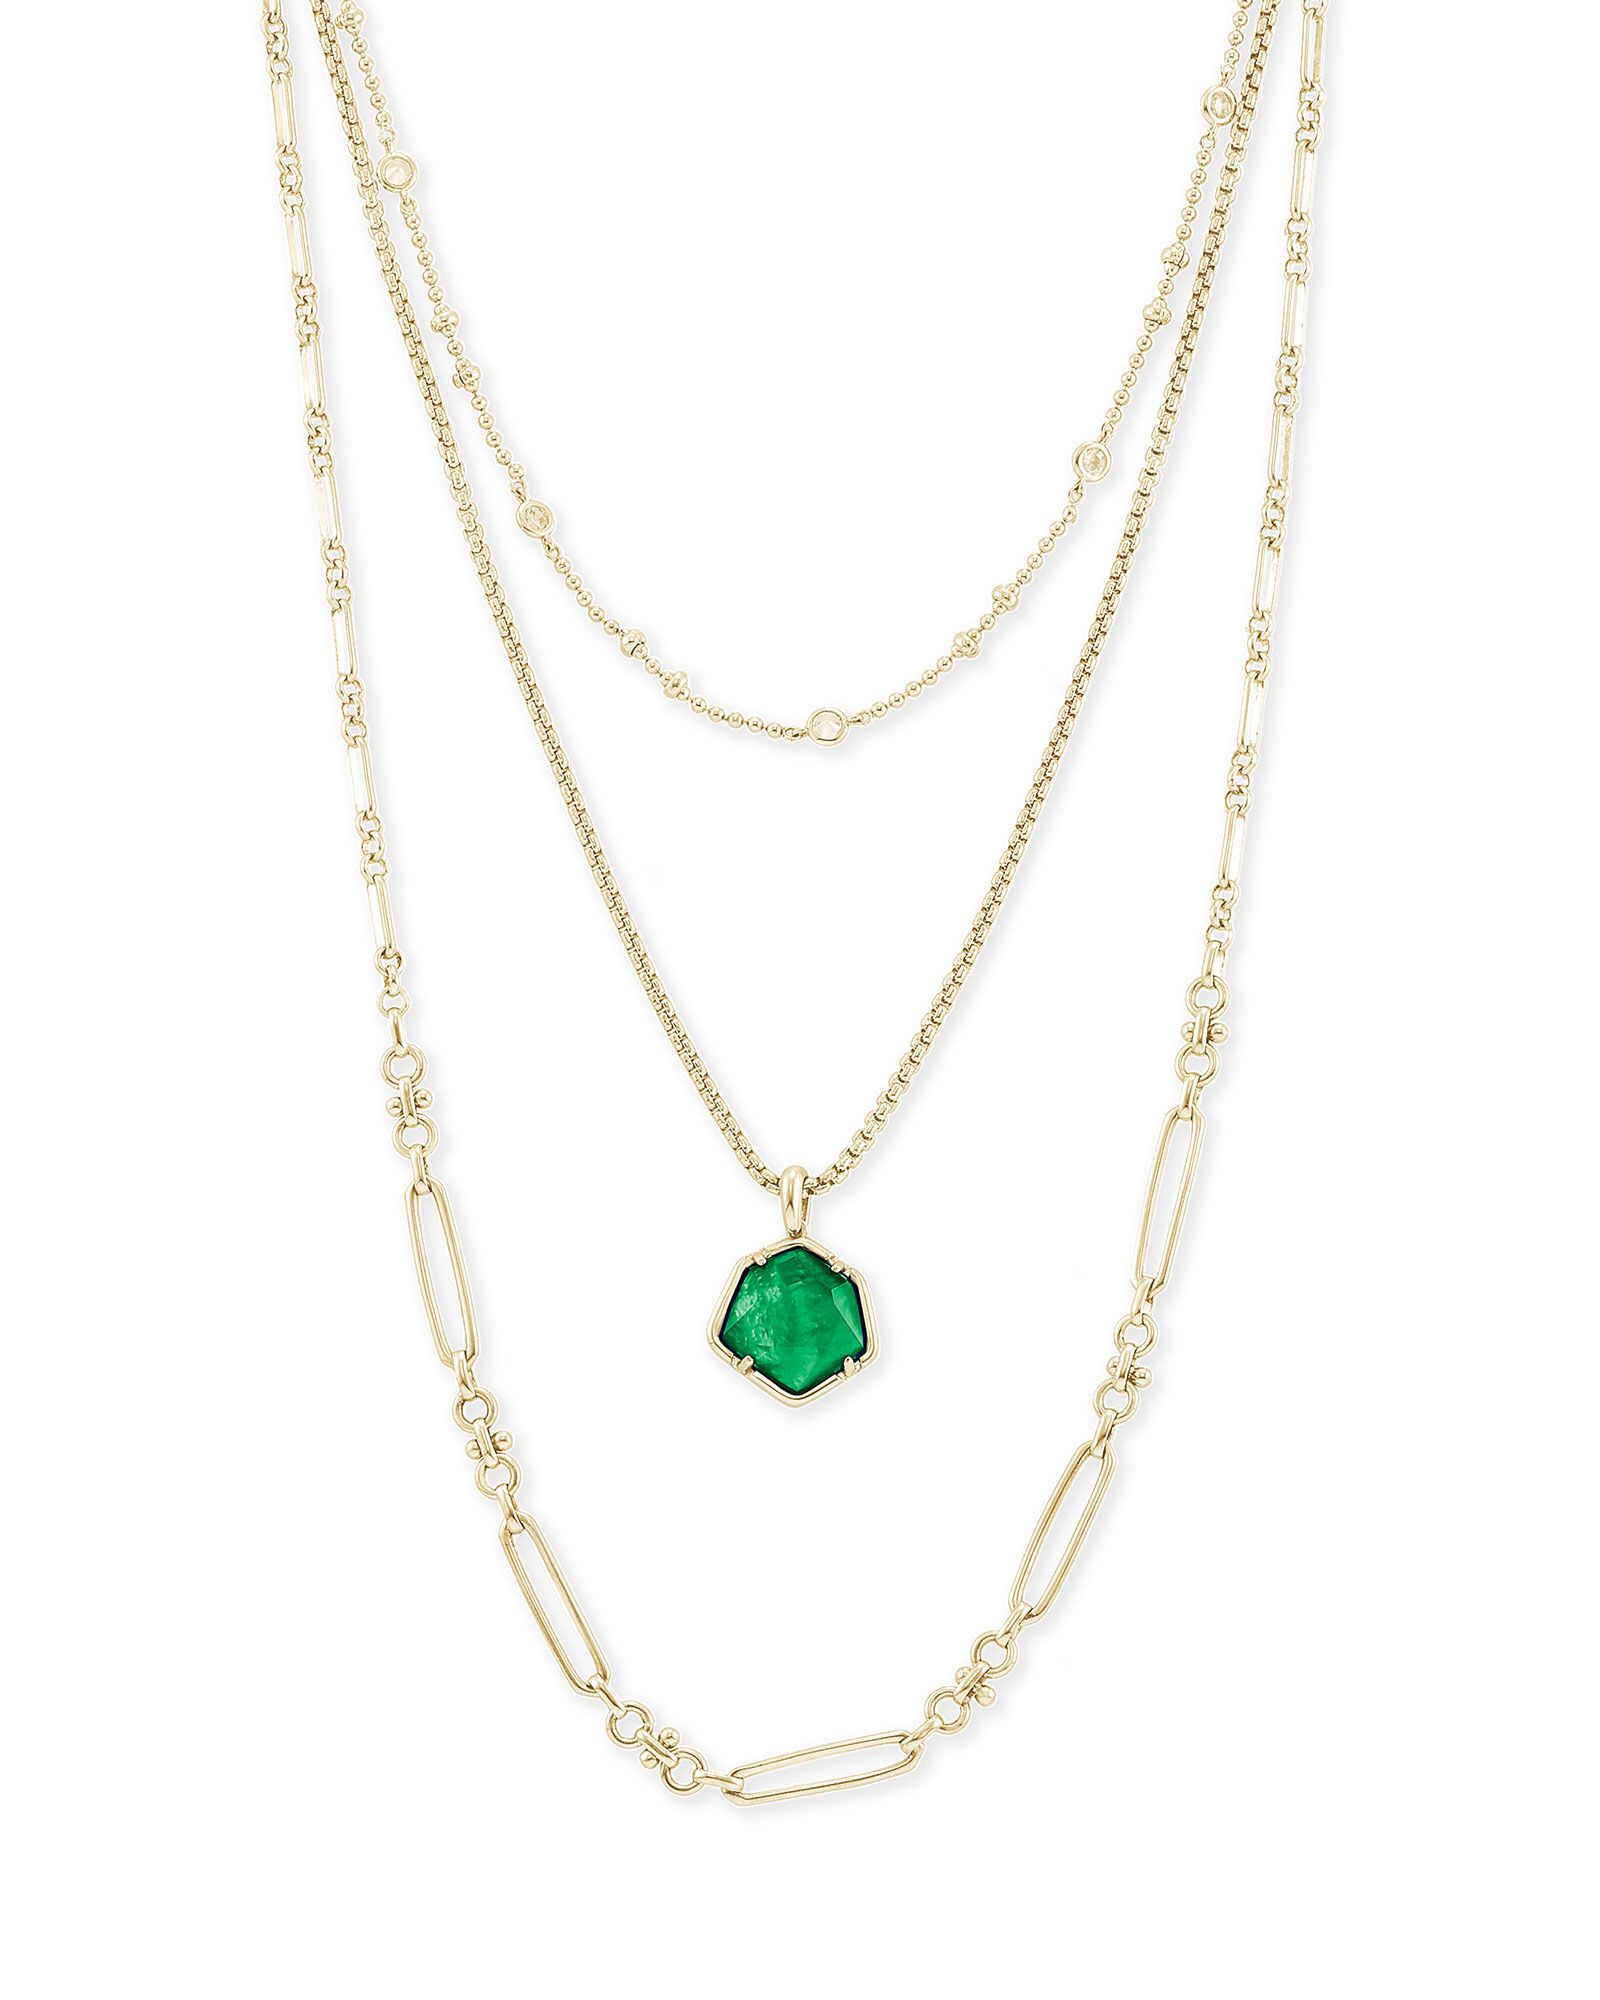 Vanessa Gold Multi Strand Necklace in Jade Green Illusion | Kendra Scott